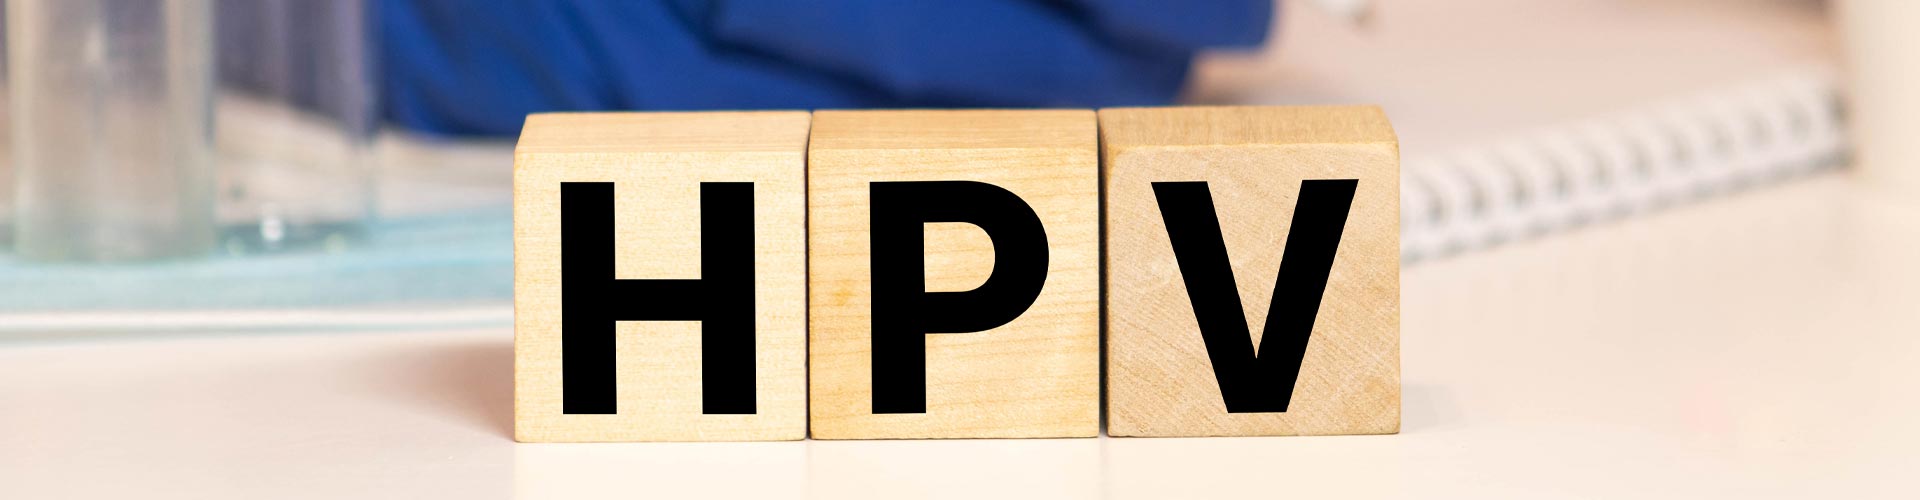 Pisani Medical Group - HPV Test